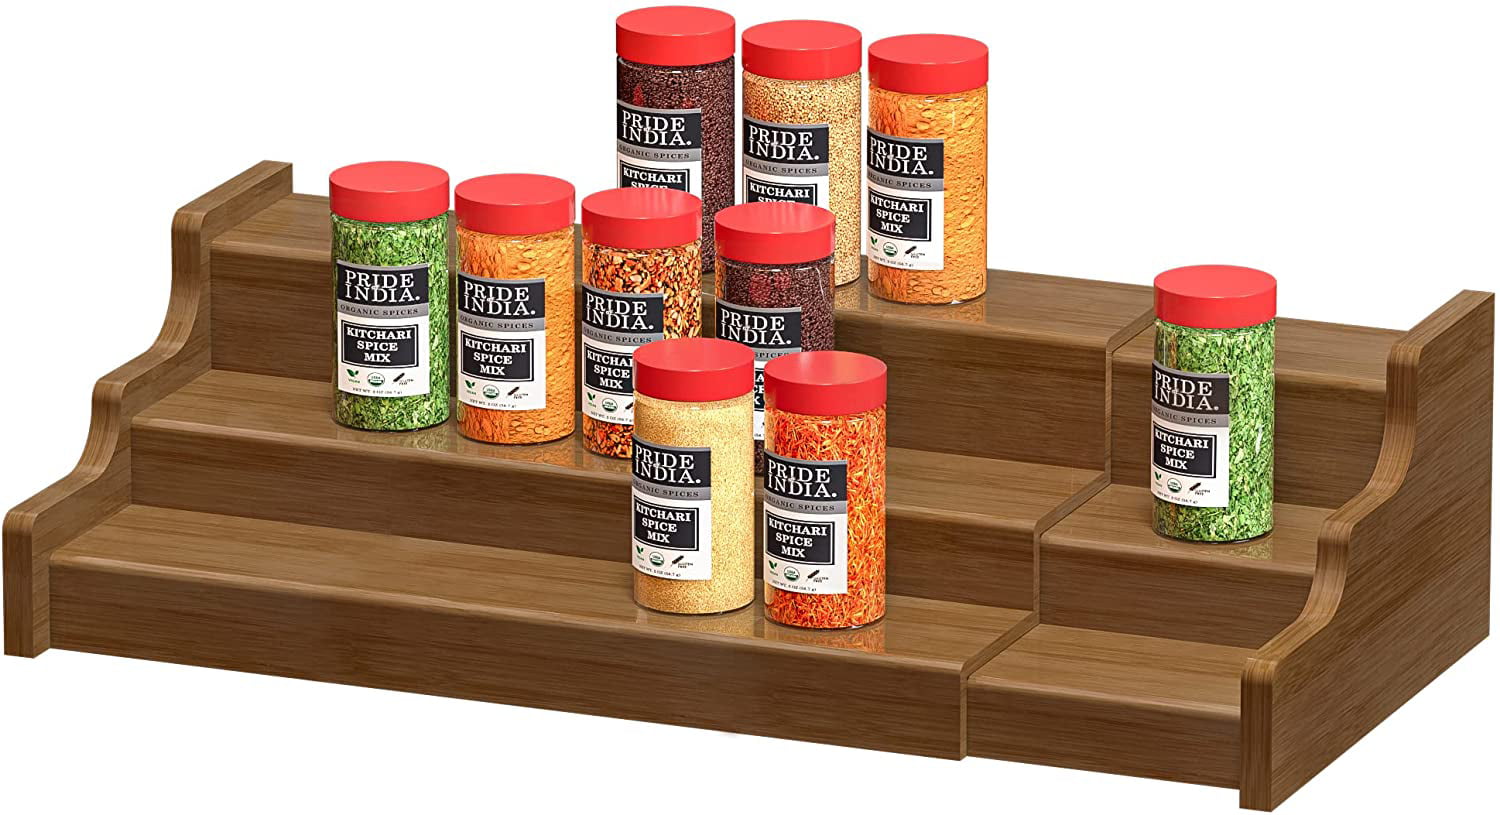 Zri Bamboo Spice Rack Kitchen Cabinet Organizer- 3 Tier Bamboo Expandable Display Shelf, Yellow, 12.70*7.70*4.30